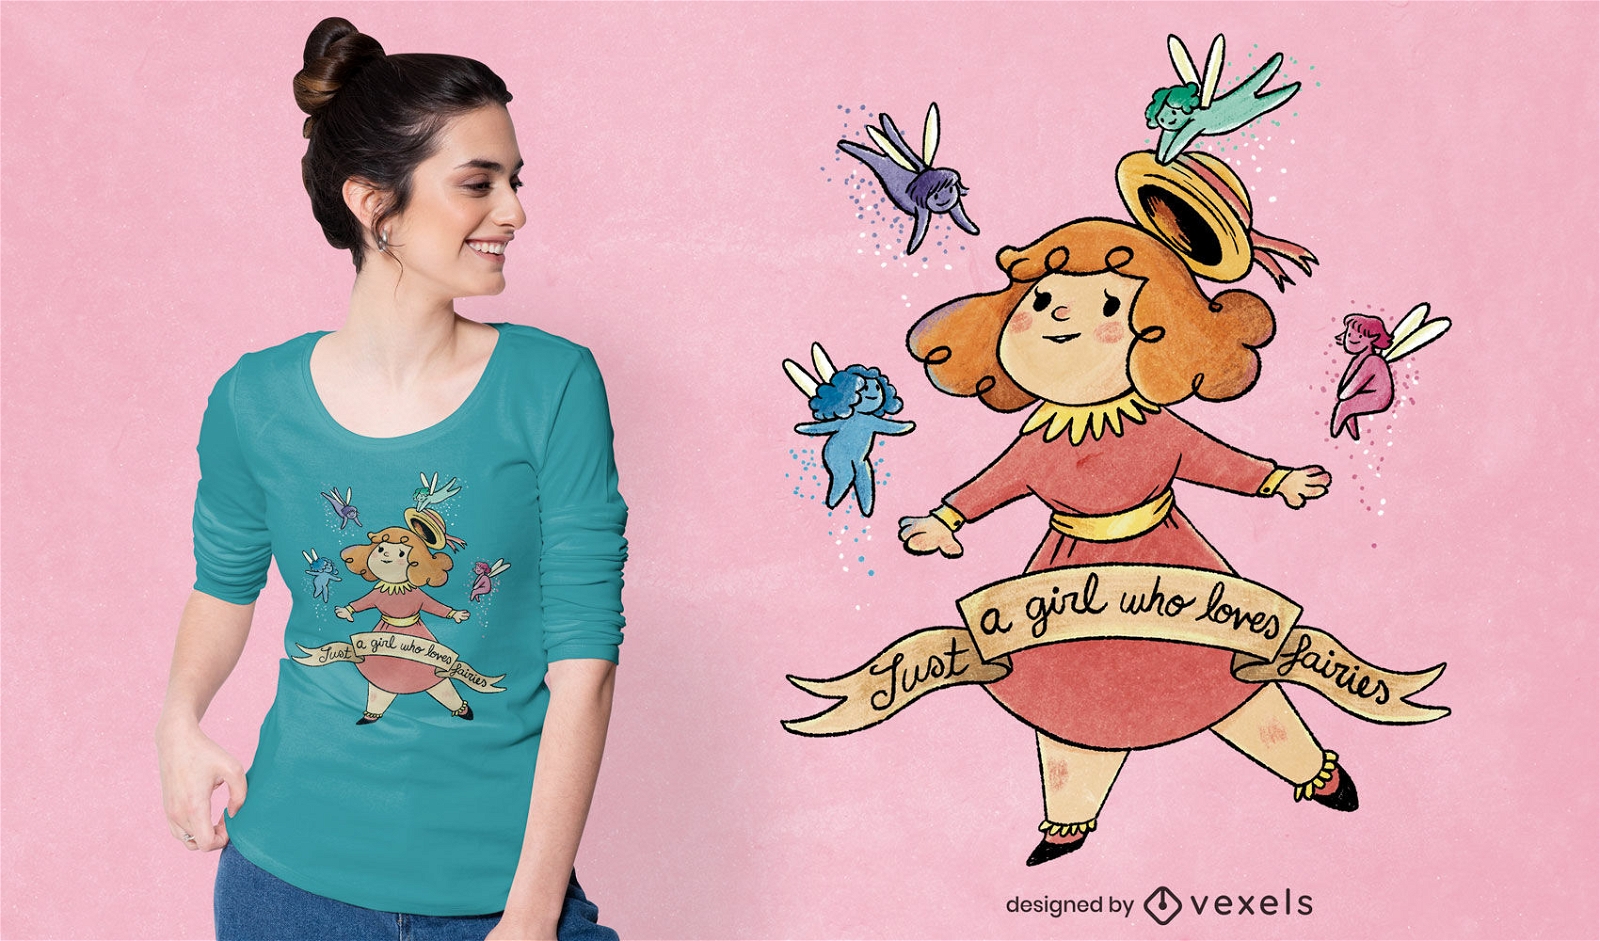 Girl and fairies fantasy doodle t-shirt psd